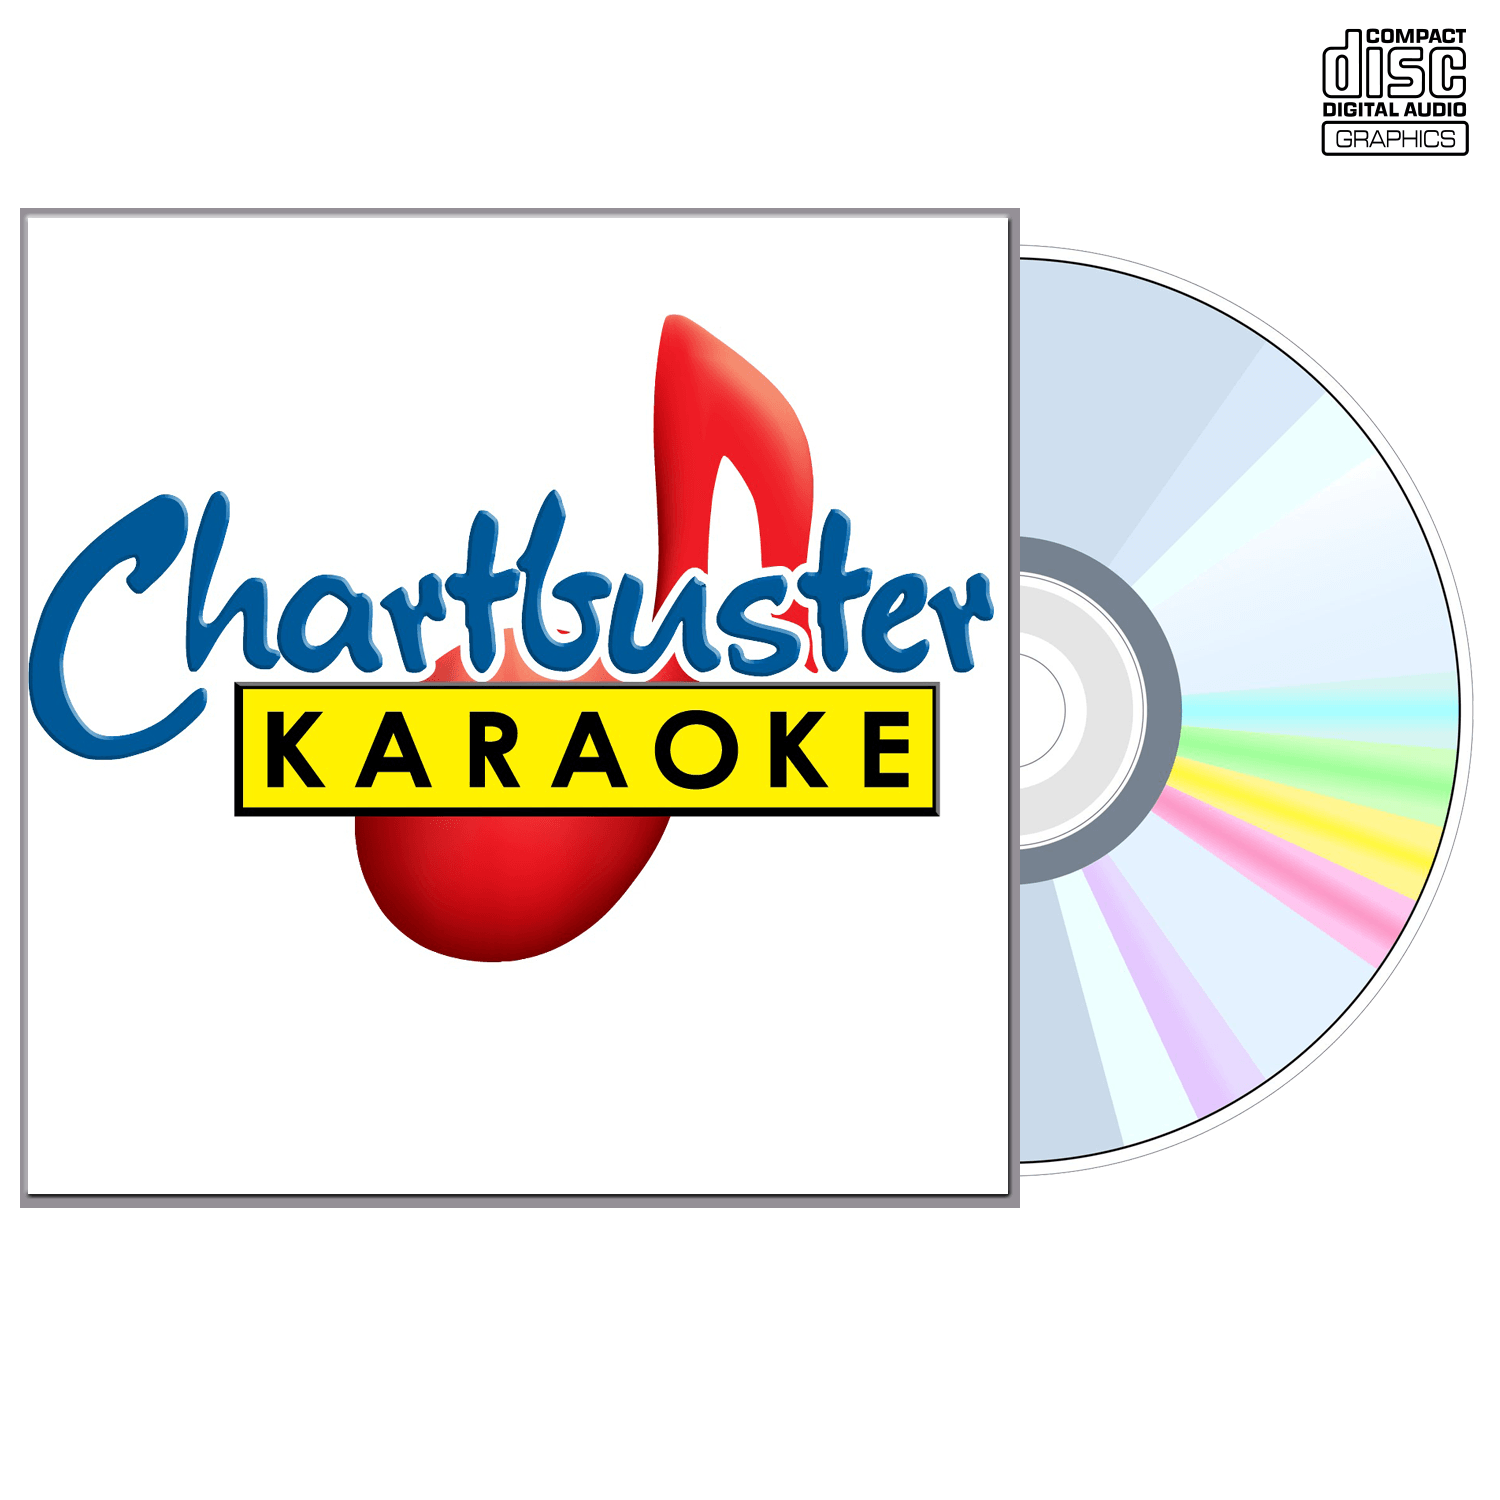 Best Of Barry Manilow - CD+G - Chartbuster Karaoke - Karaoke Home Entertainment